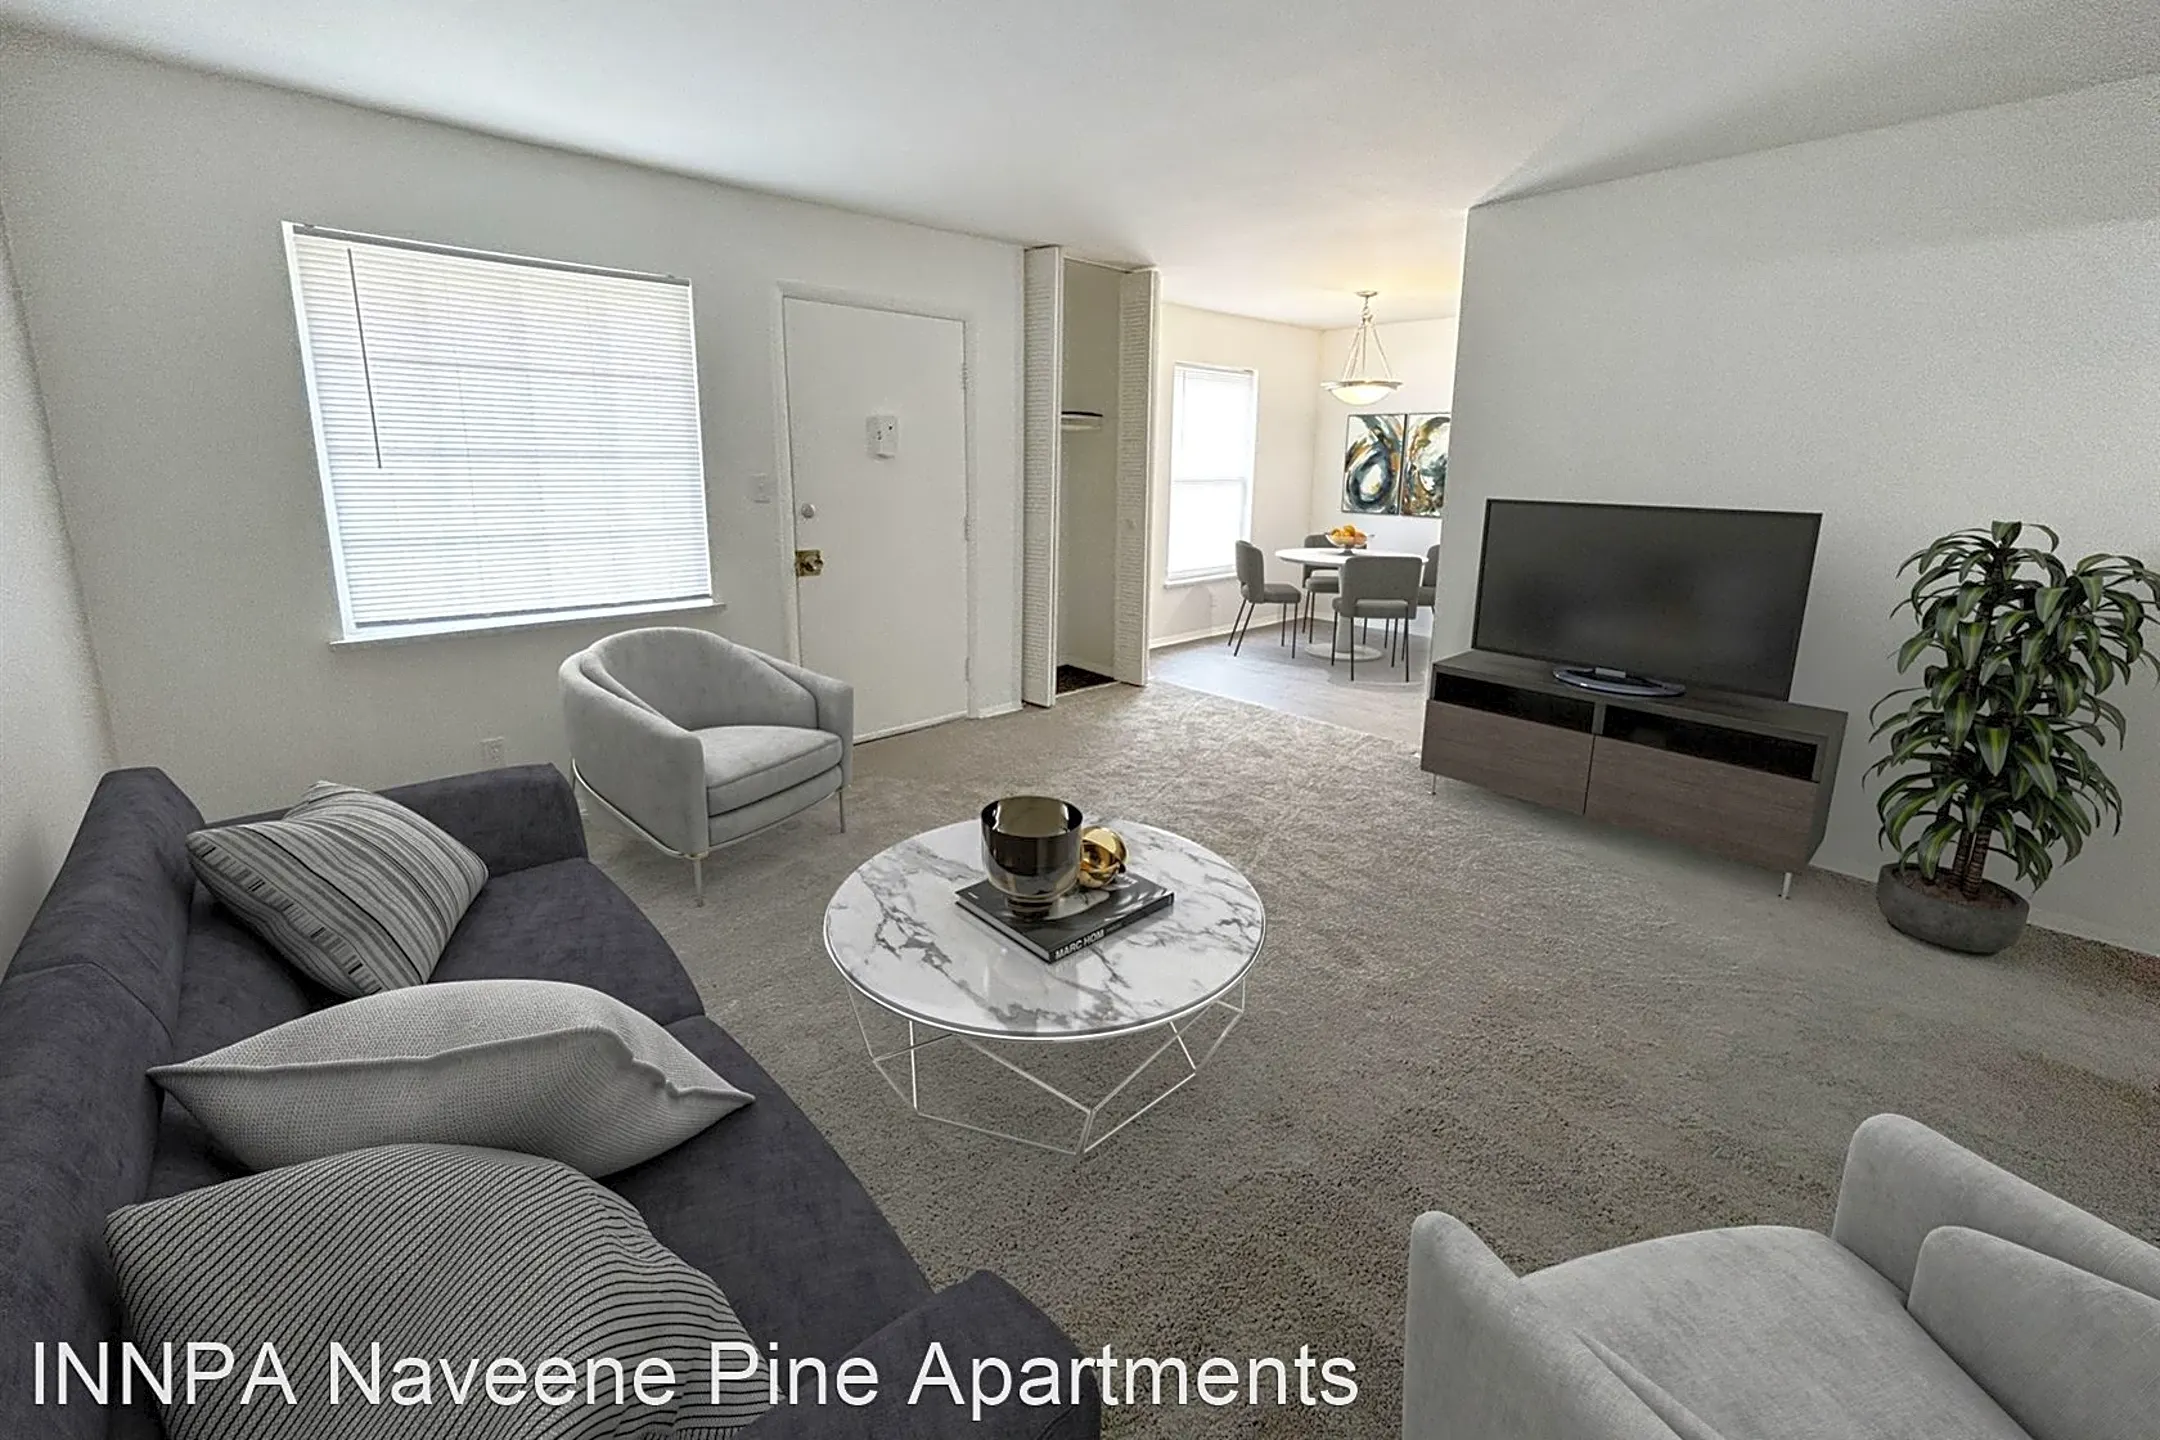 Living Room - Naveen Pine Apartments - Evansville, IN